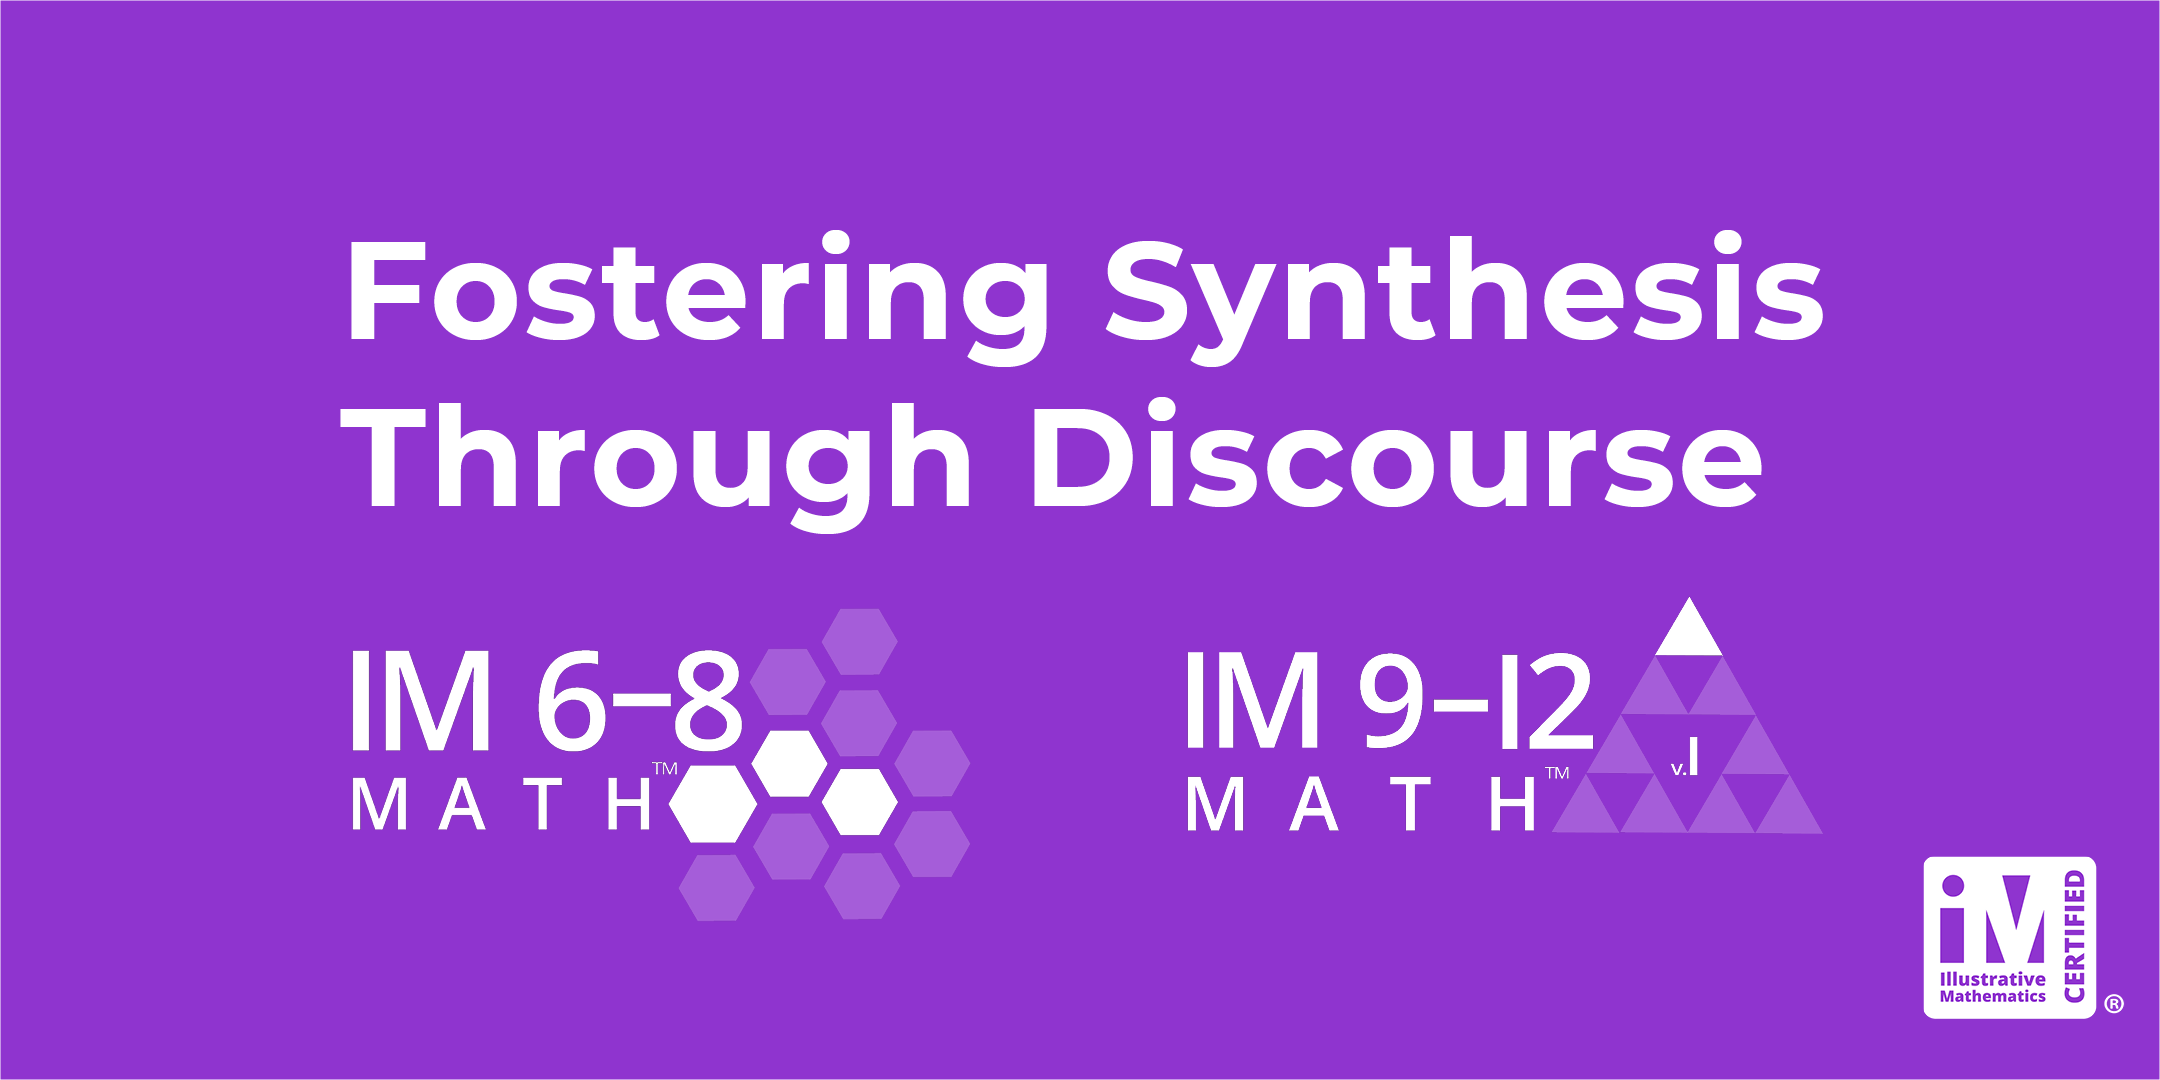 IM 6-12 Math: Fostering Synthesis Through Discourse